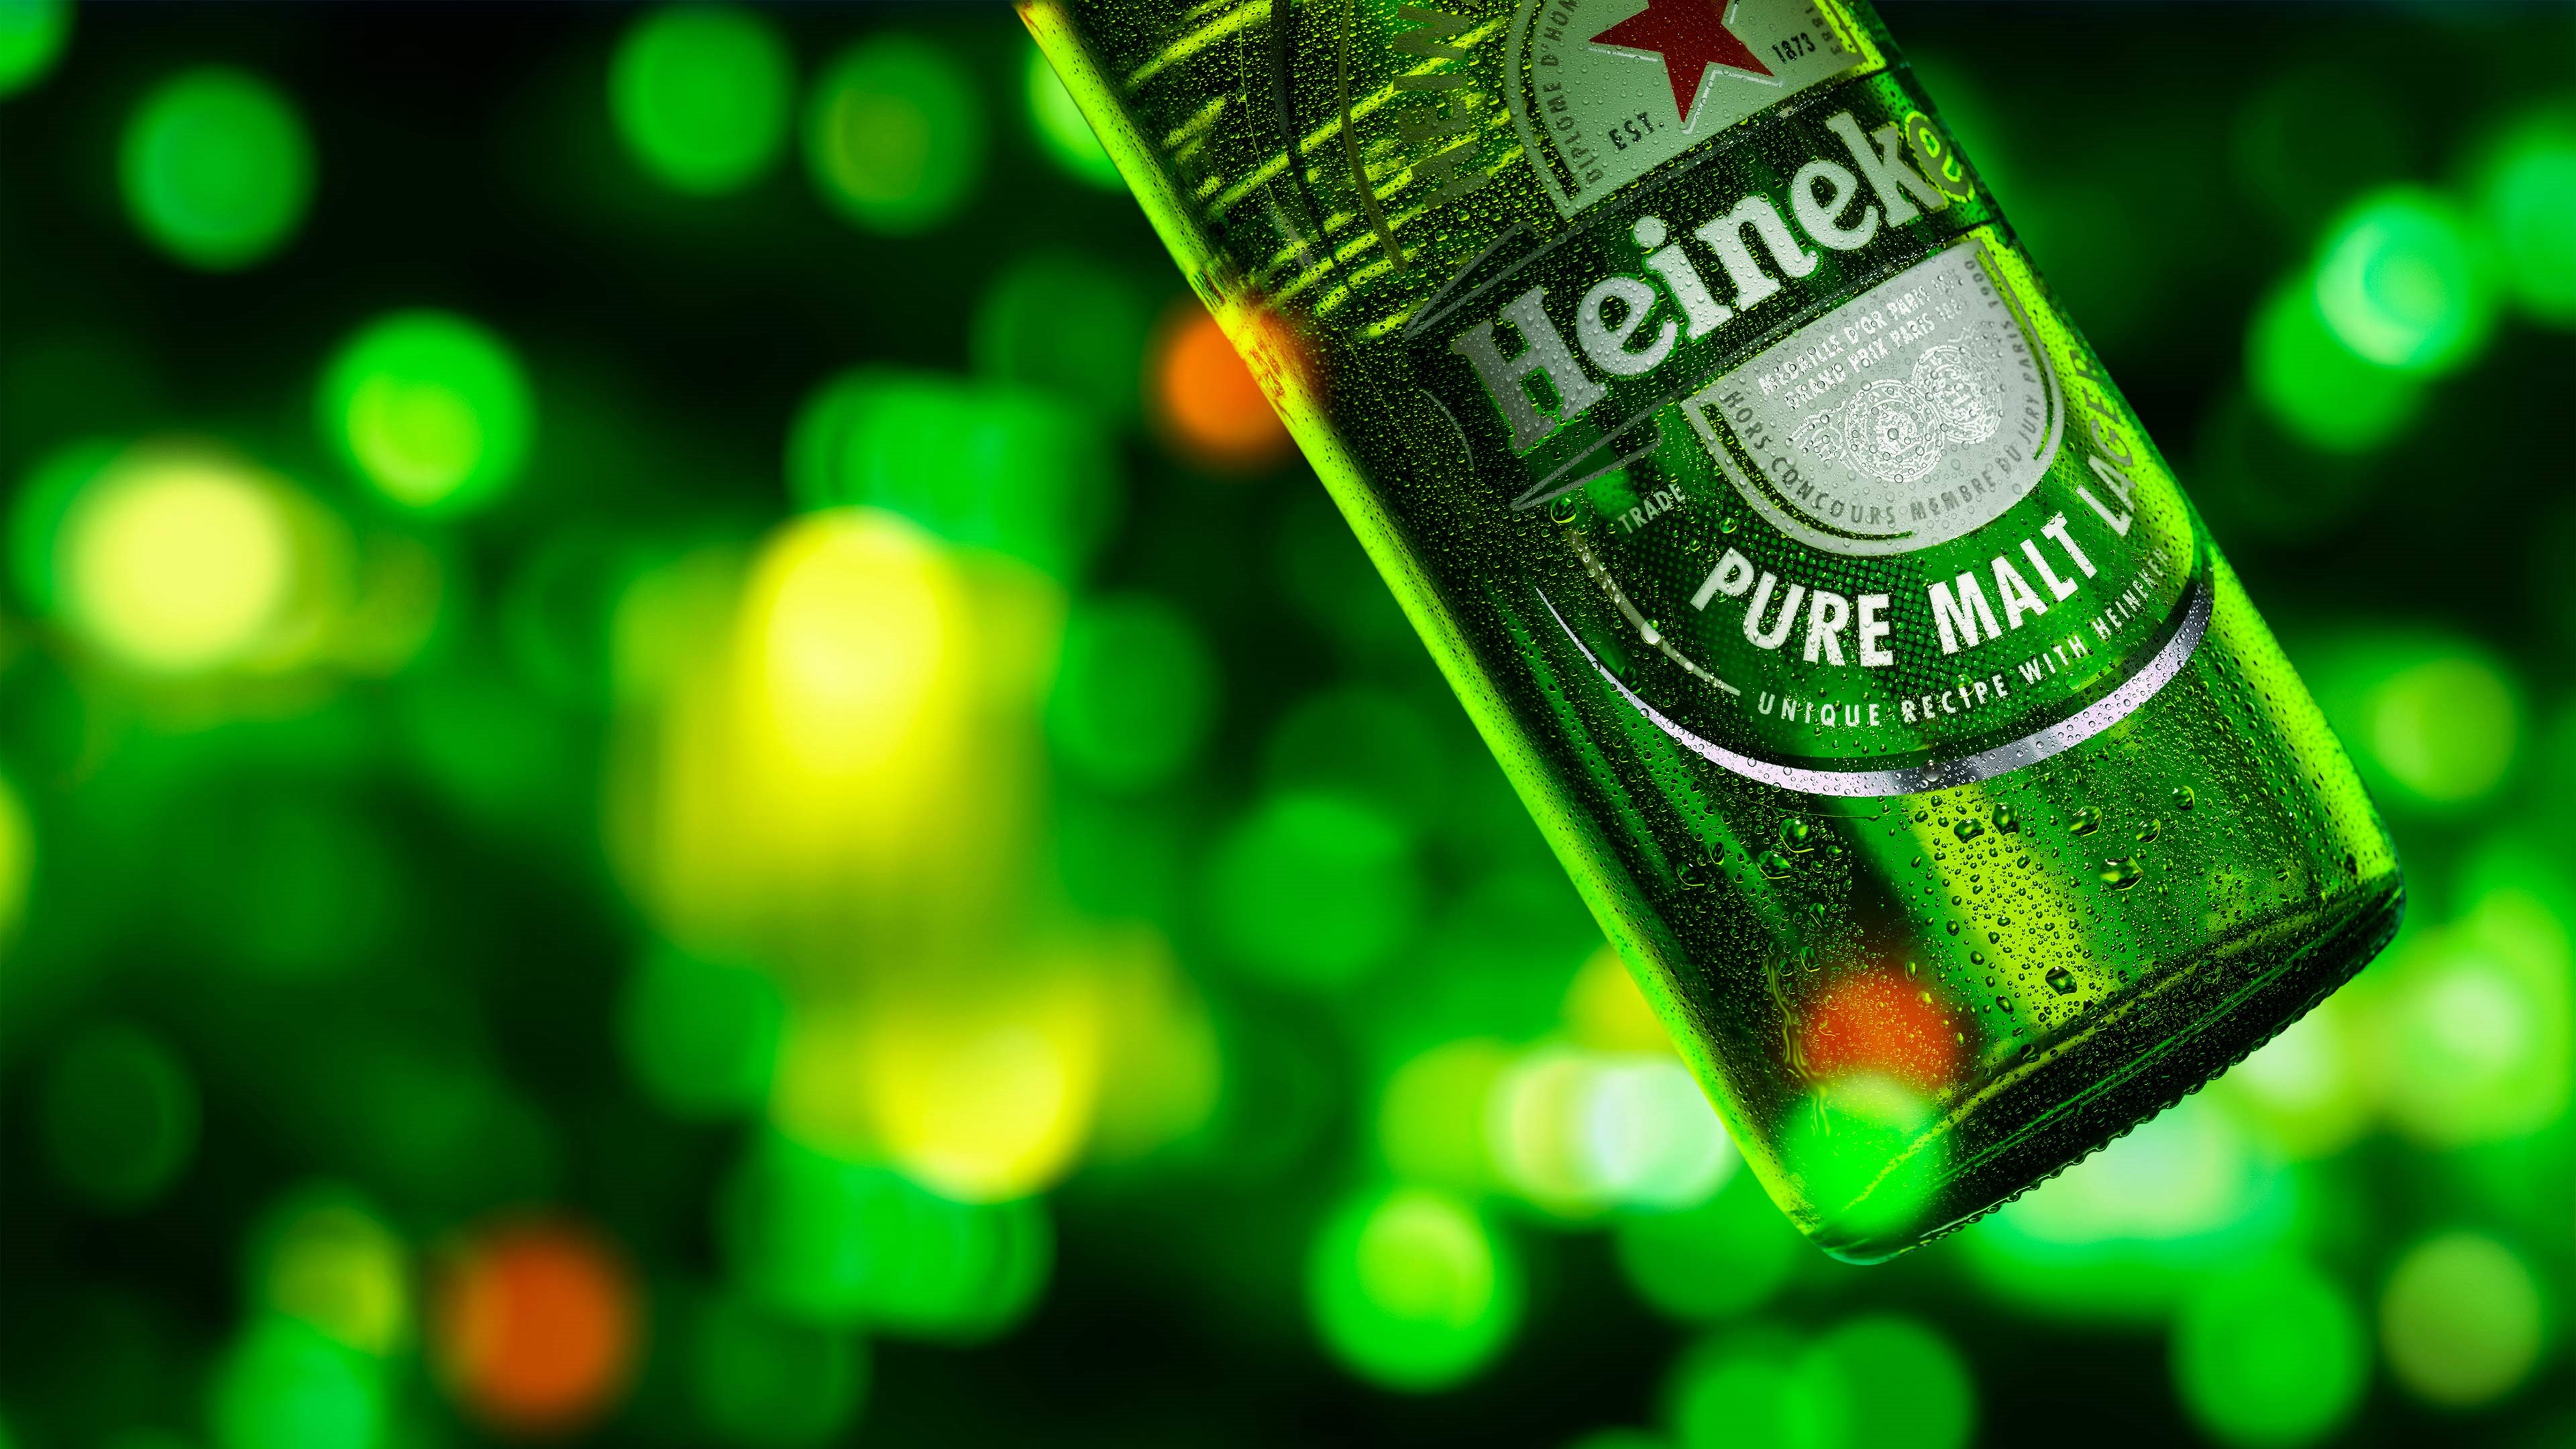 Welcome to the world of Heineken®